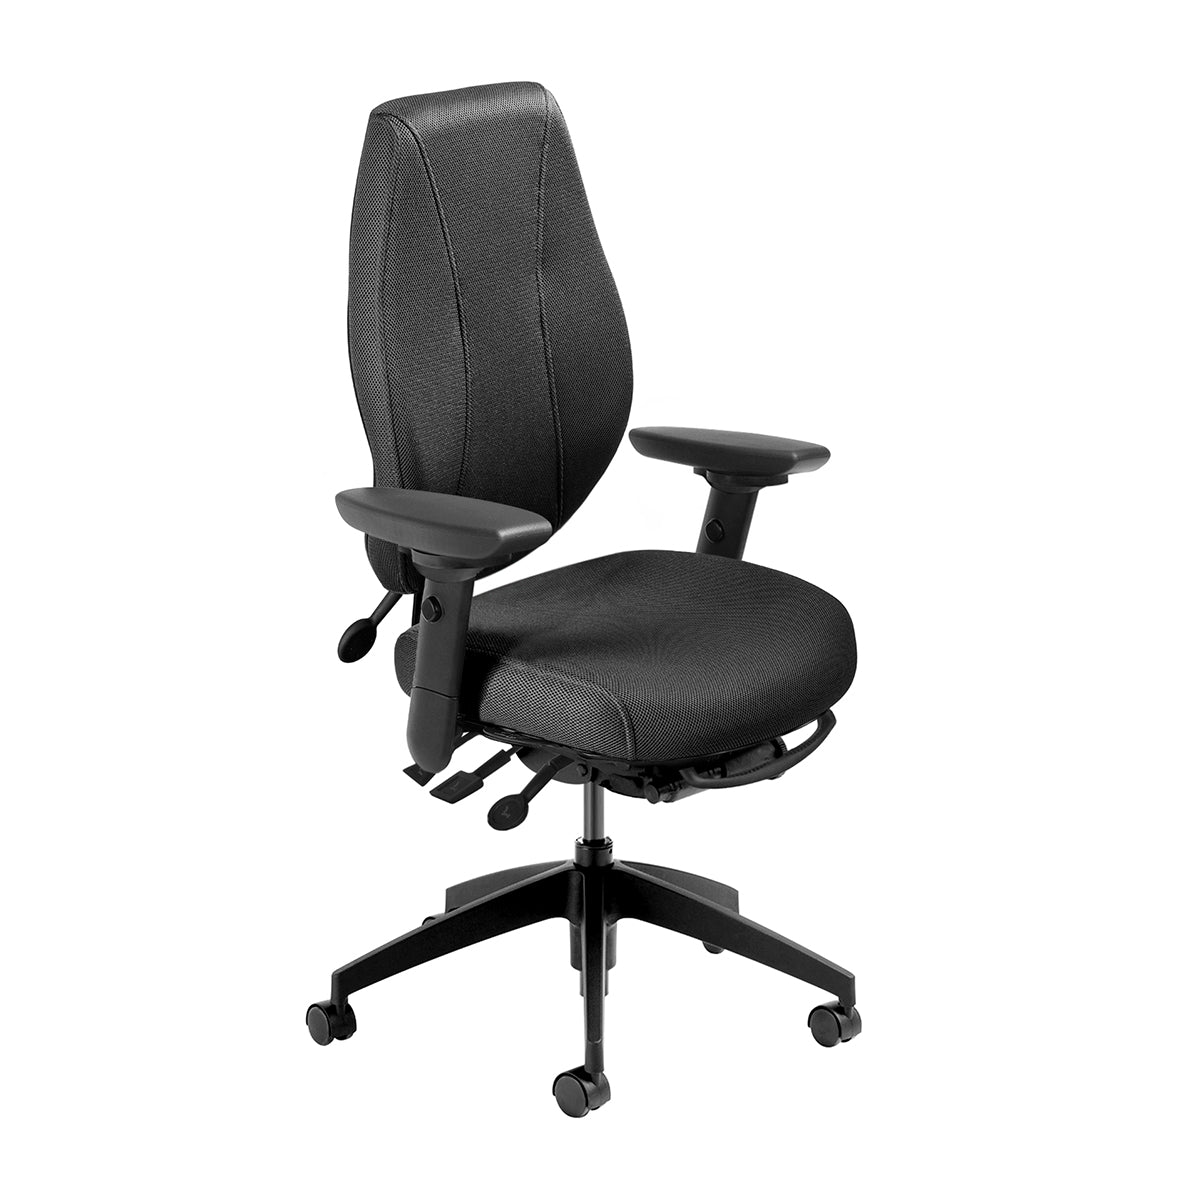 CCHST: Ergonomie au bureau - Chaise ergonomique